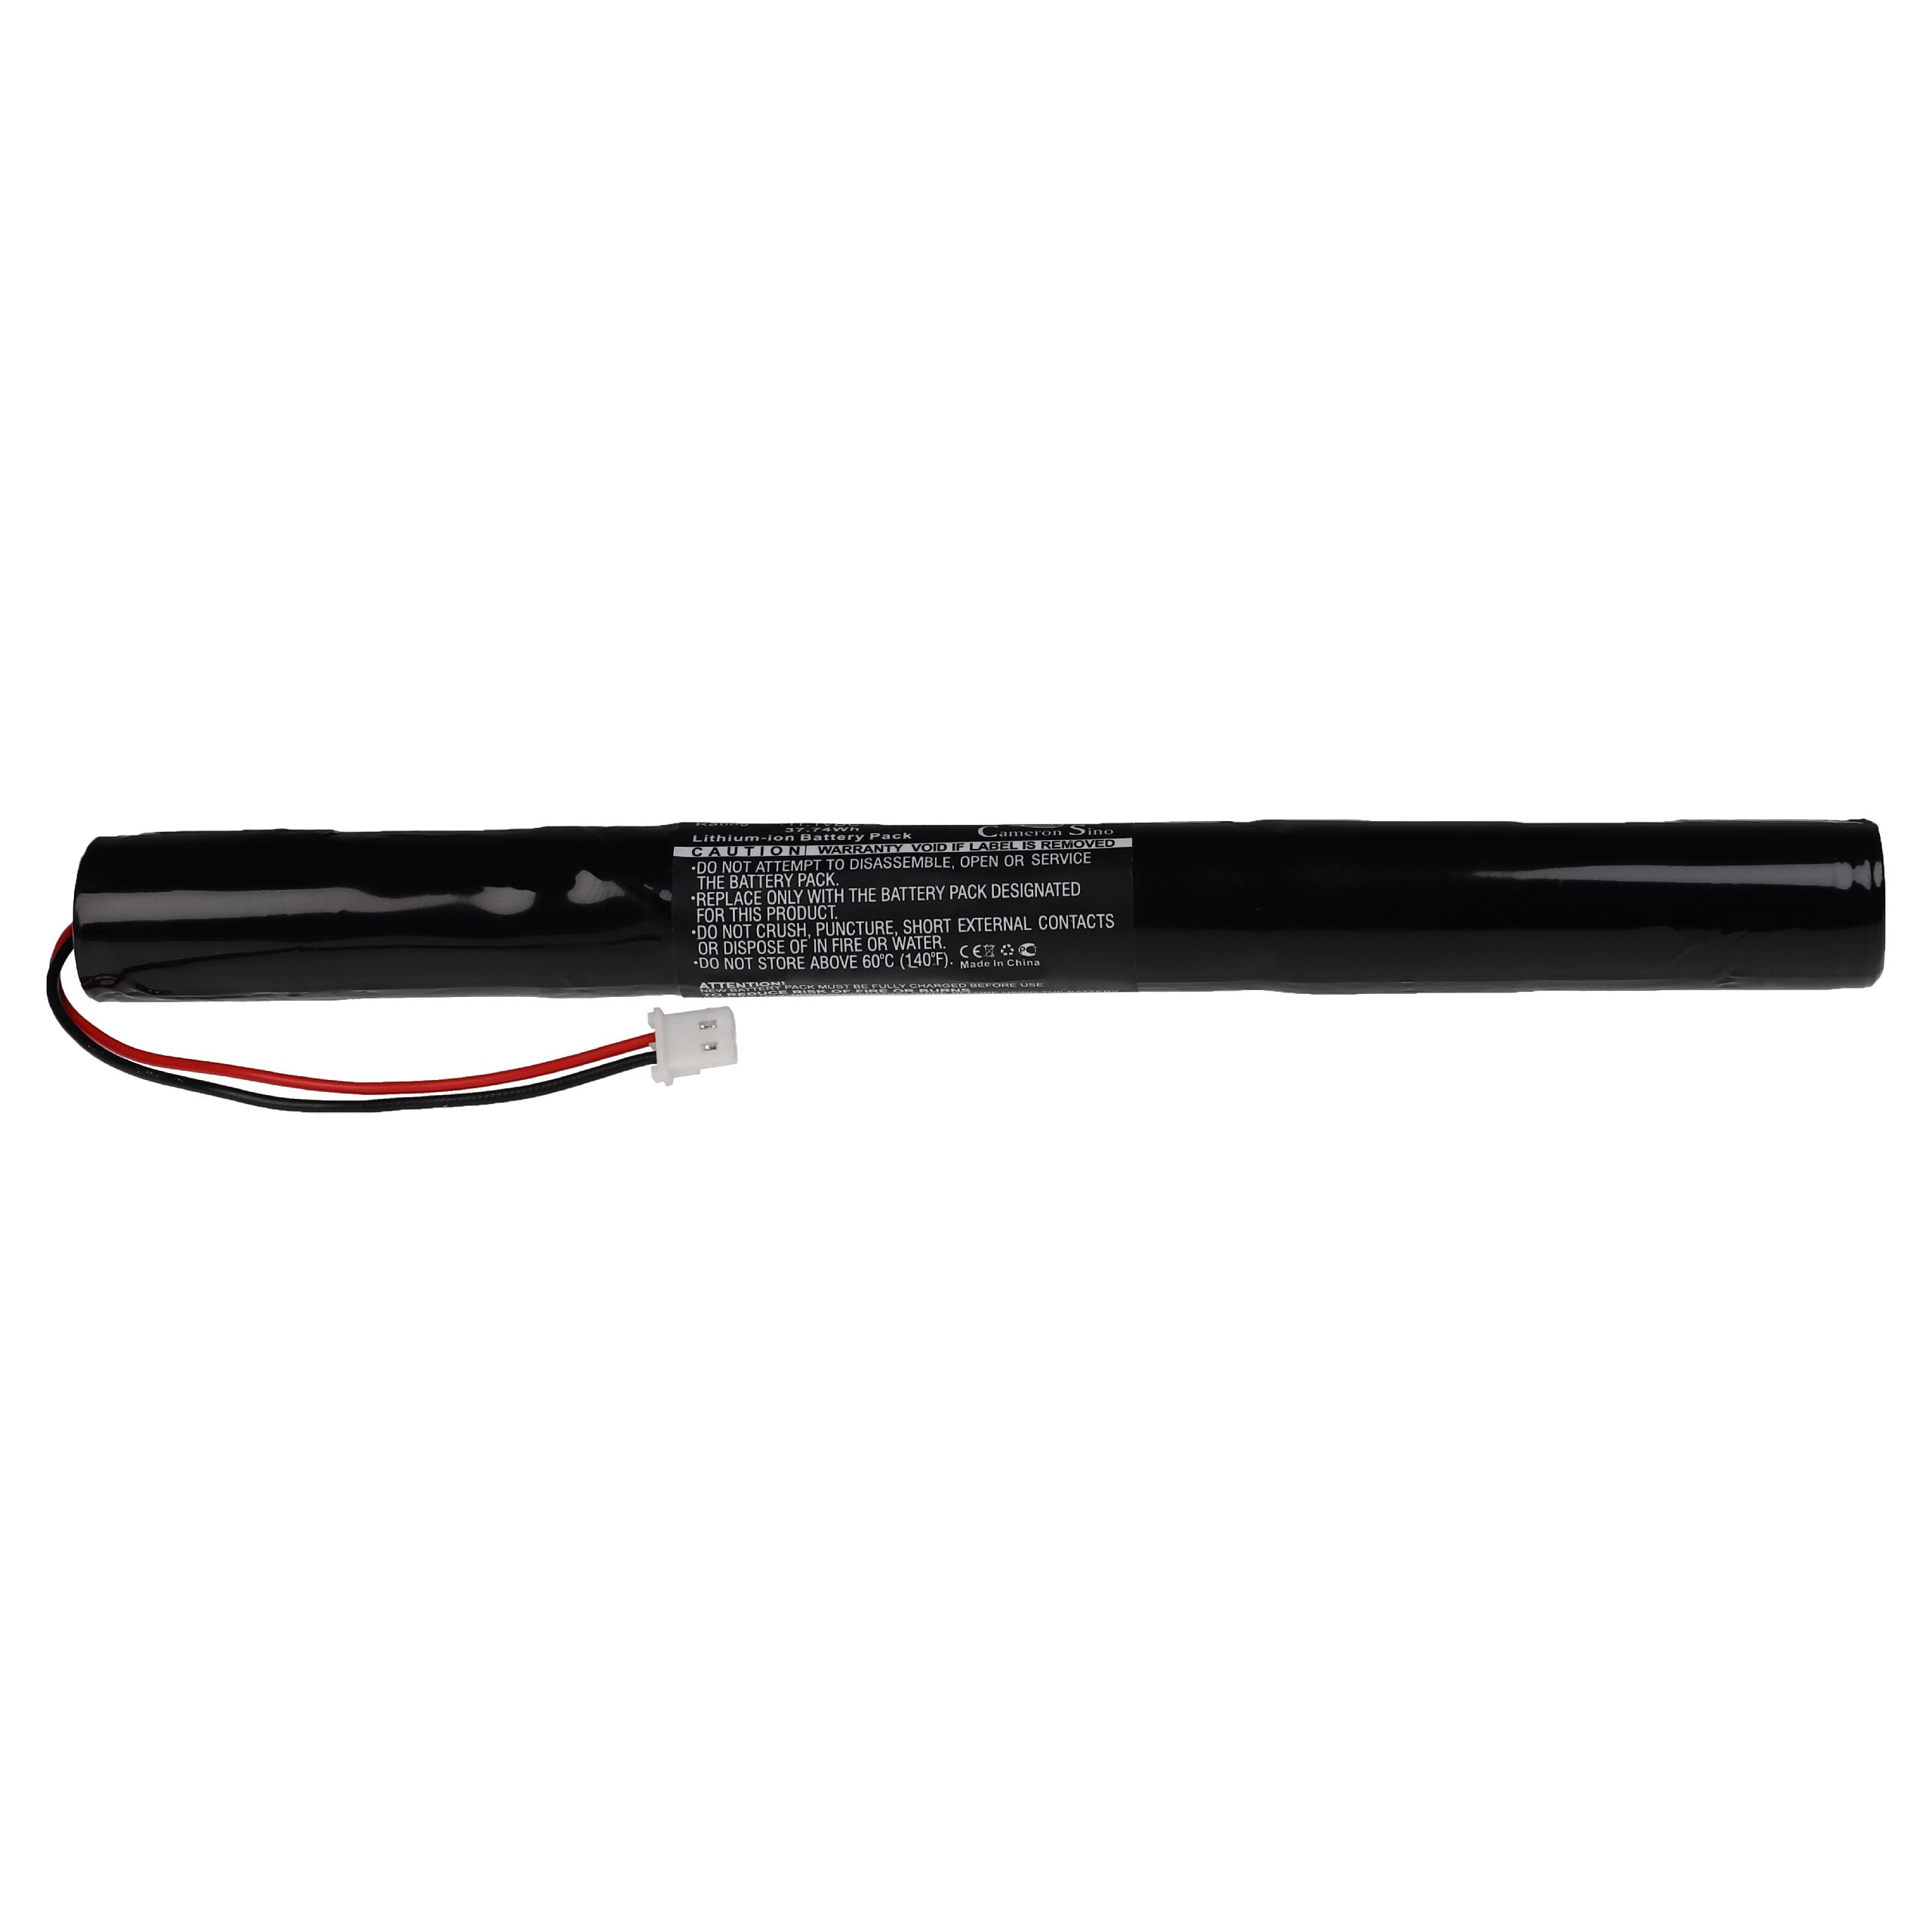 Akumulator do głośnika Jawbone zamiennik Jawbone J200/ICR18650F1L, 8390-KA02-0580 - Li-Ion 3400mAh